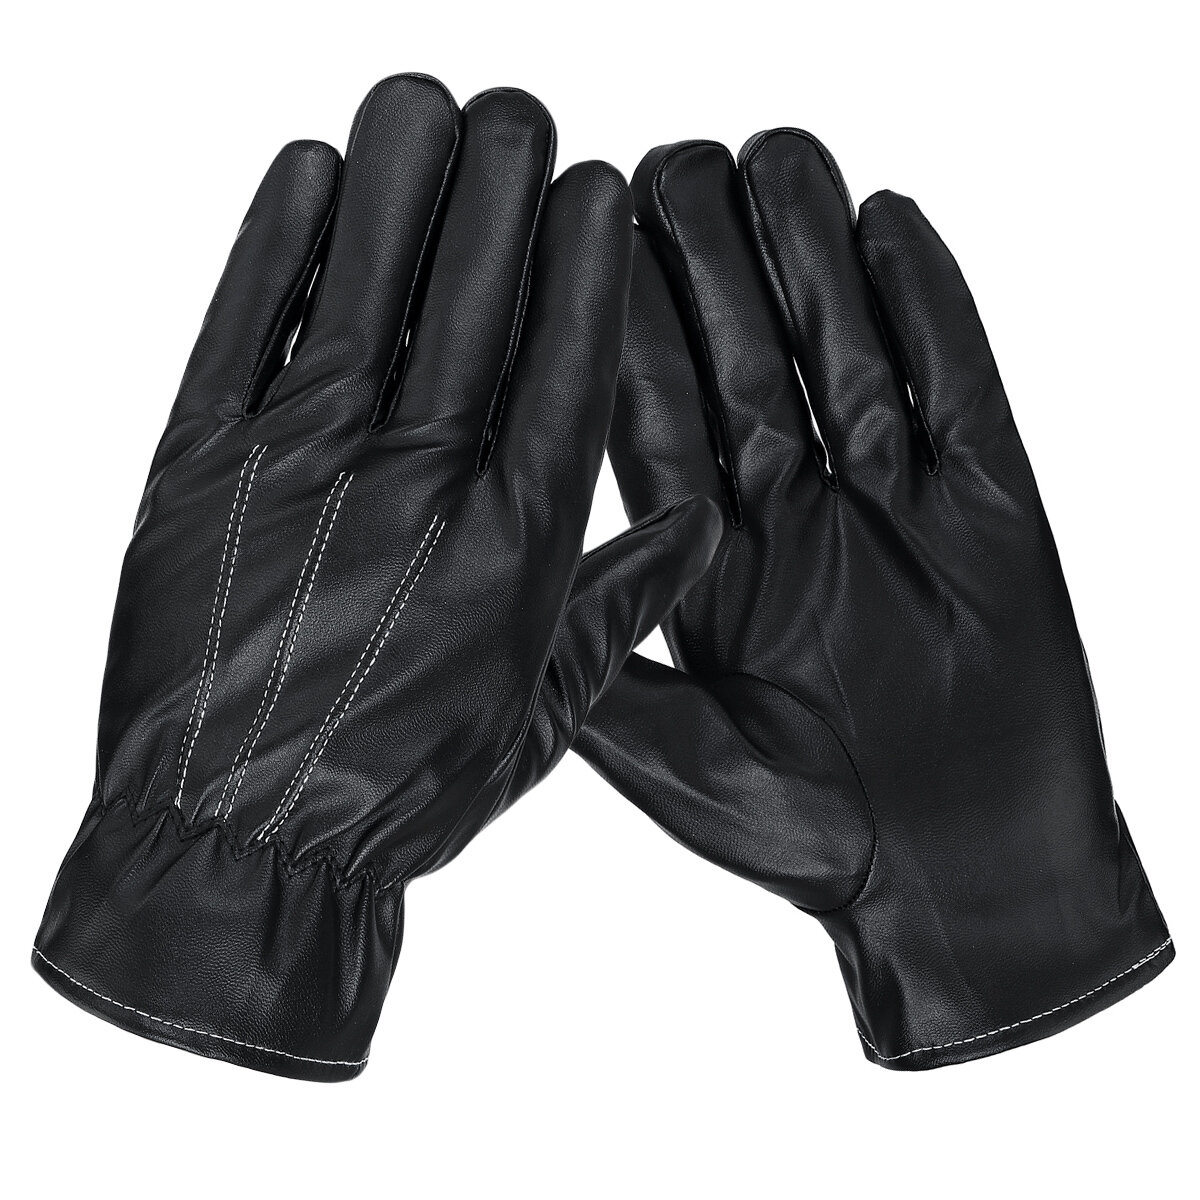 1 Pair Men Women Winter Gloves PU Leather Touchscreen Warm Windproof Waterproof Sport Golves Ski Cycling Bike Motorcycle